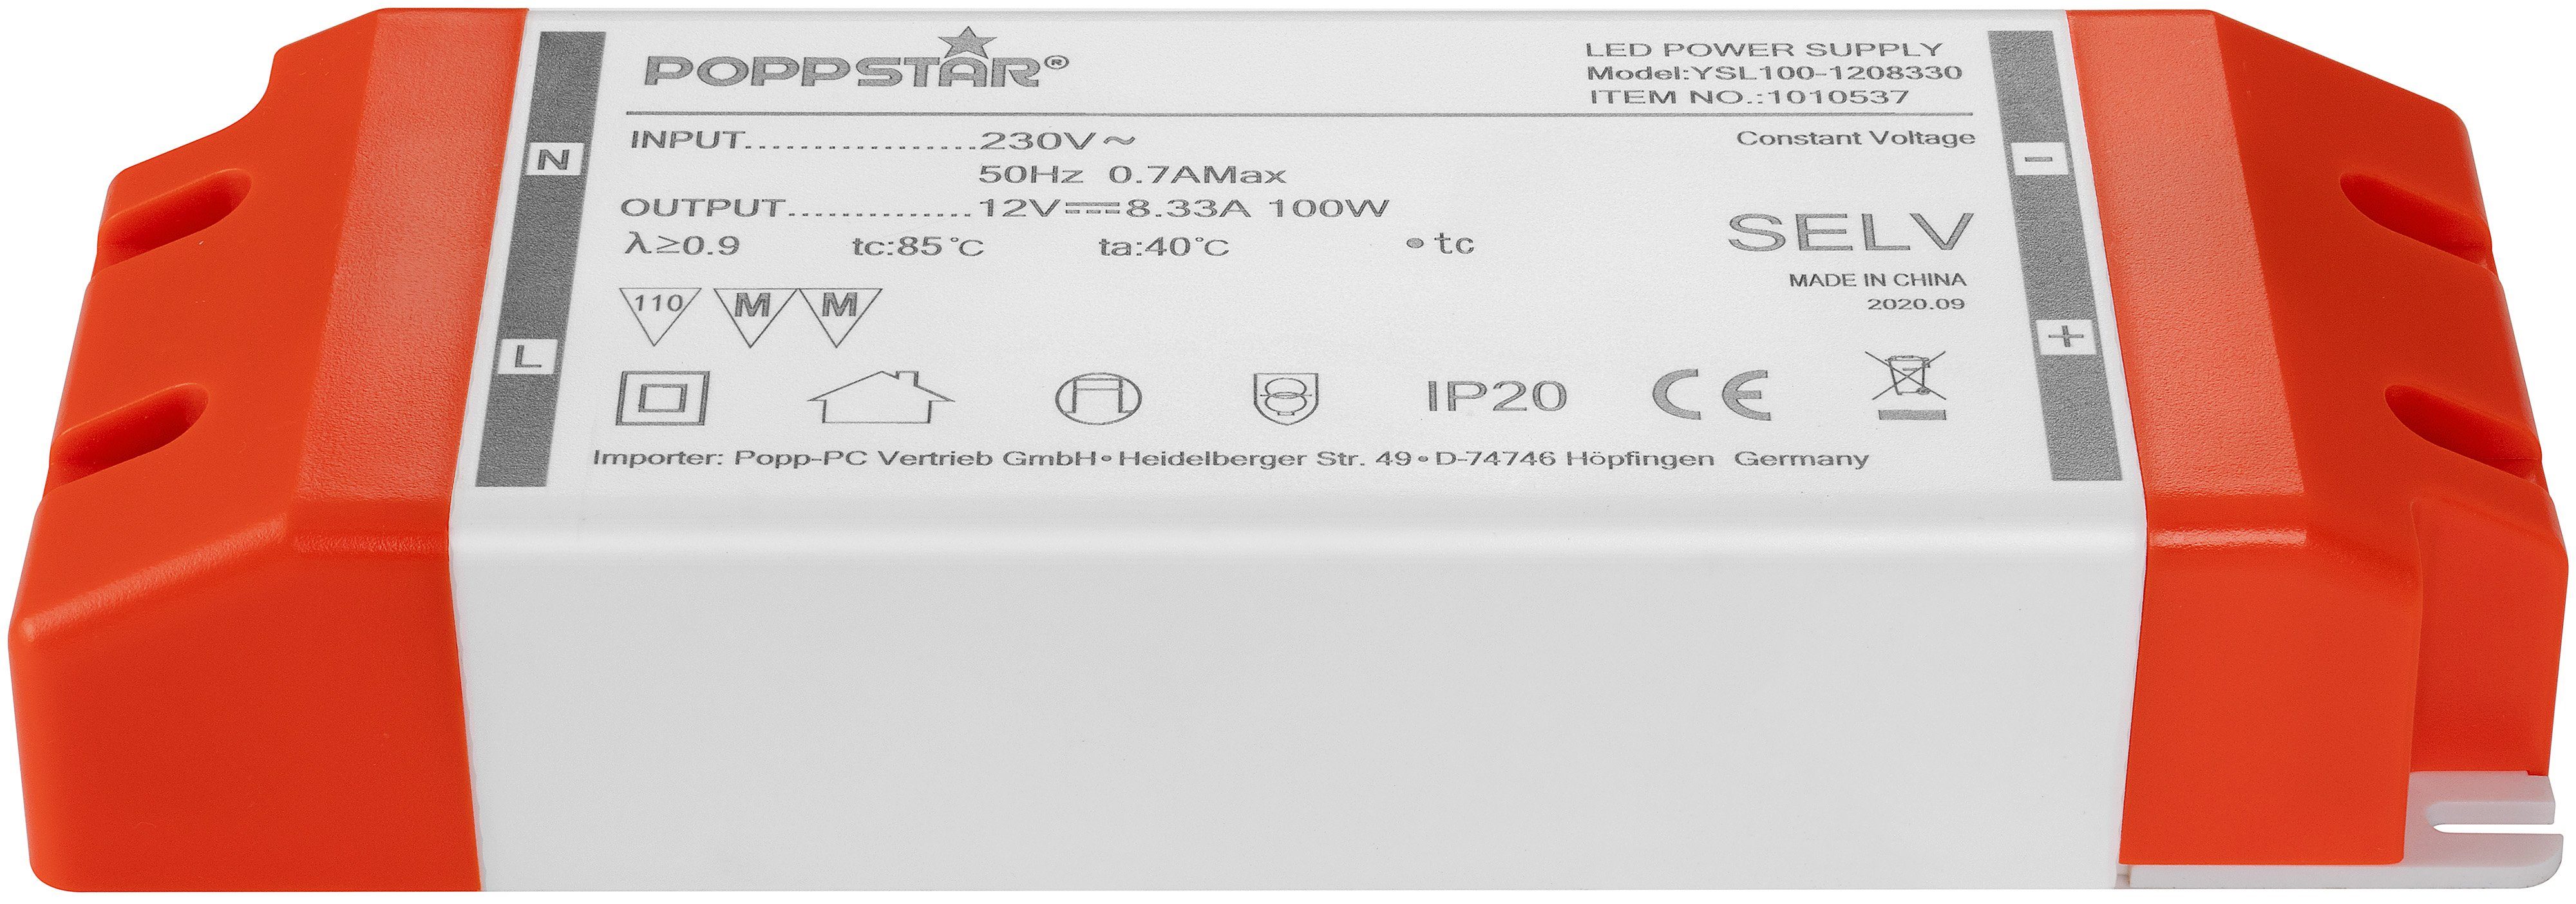 bis 100 8,33A DC 230V für Transformator LED LED LEDs) (12V / Poppstar Watt 12V Trafo AC 1W Trafo